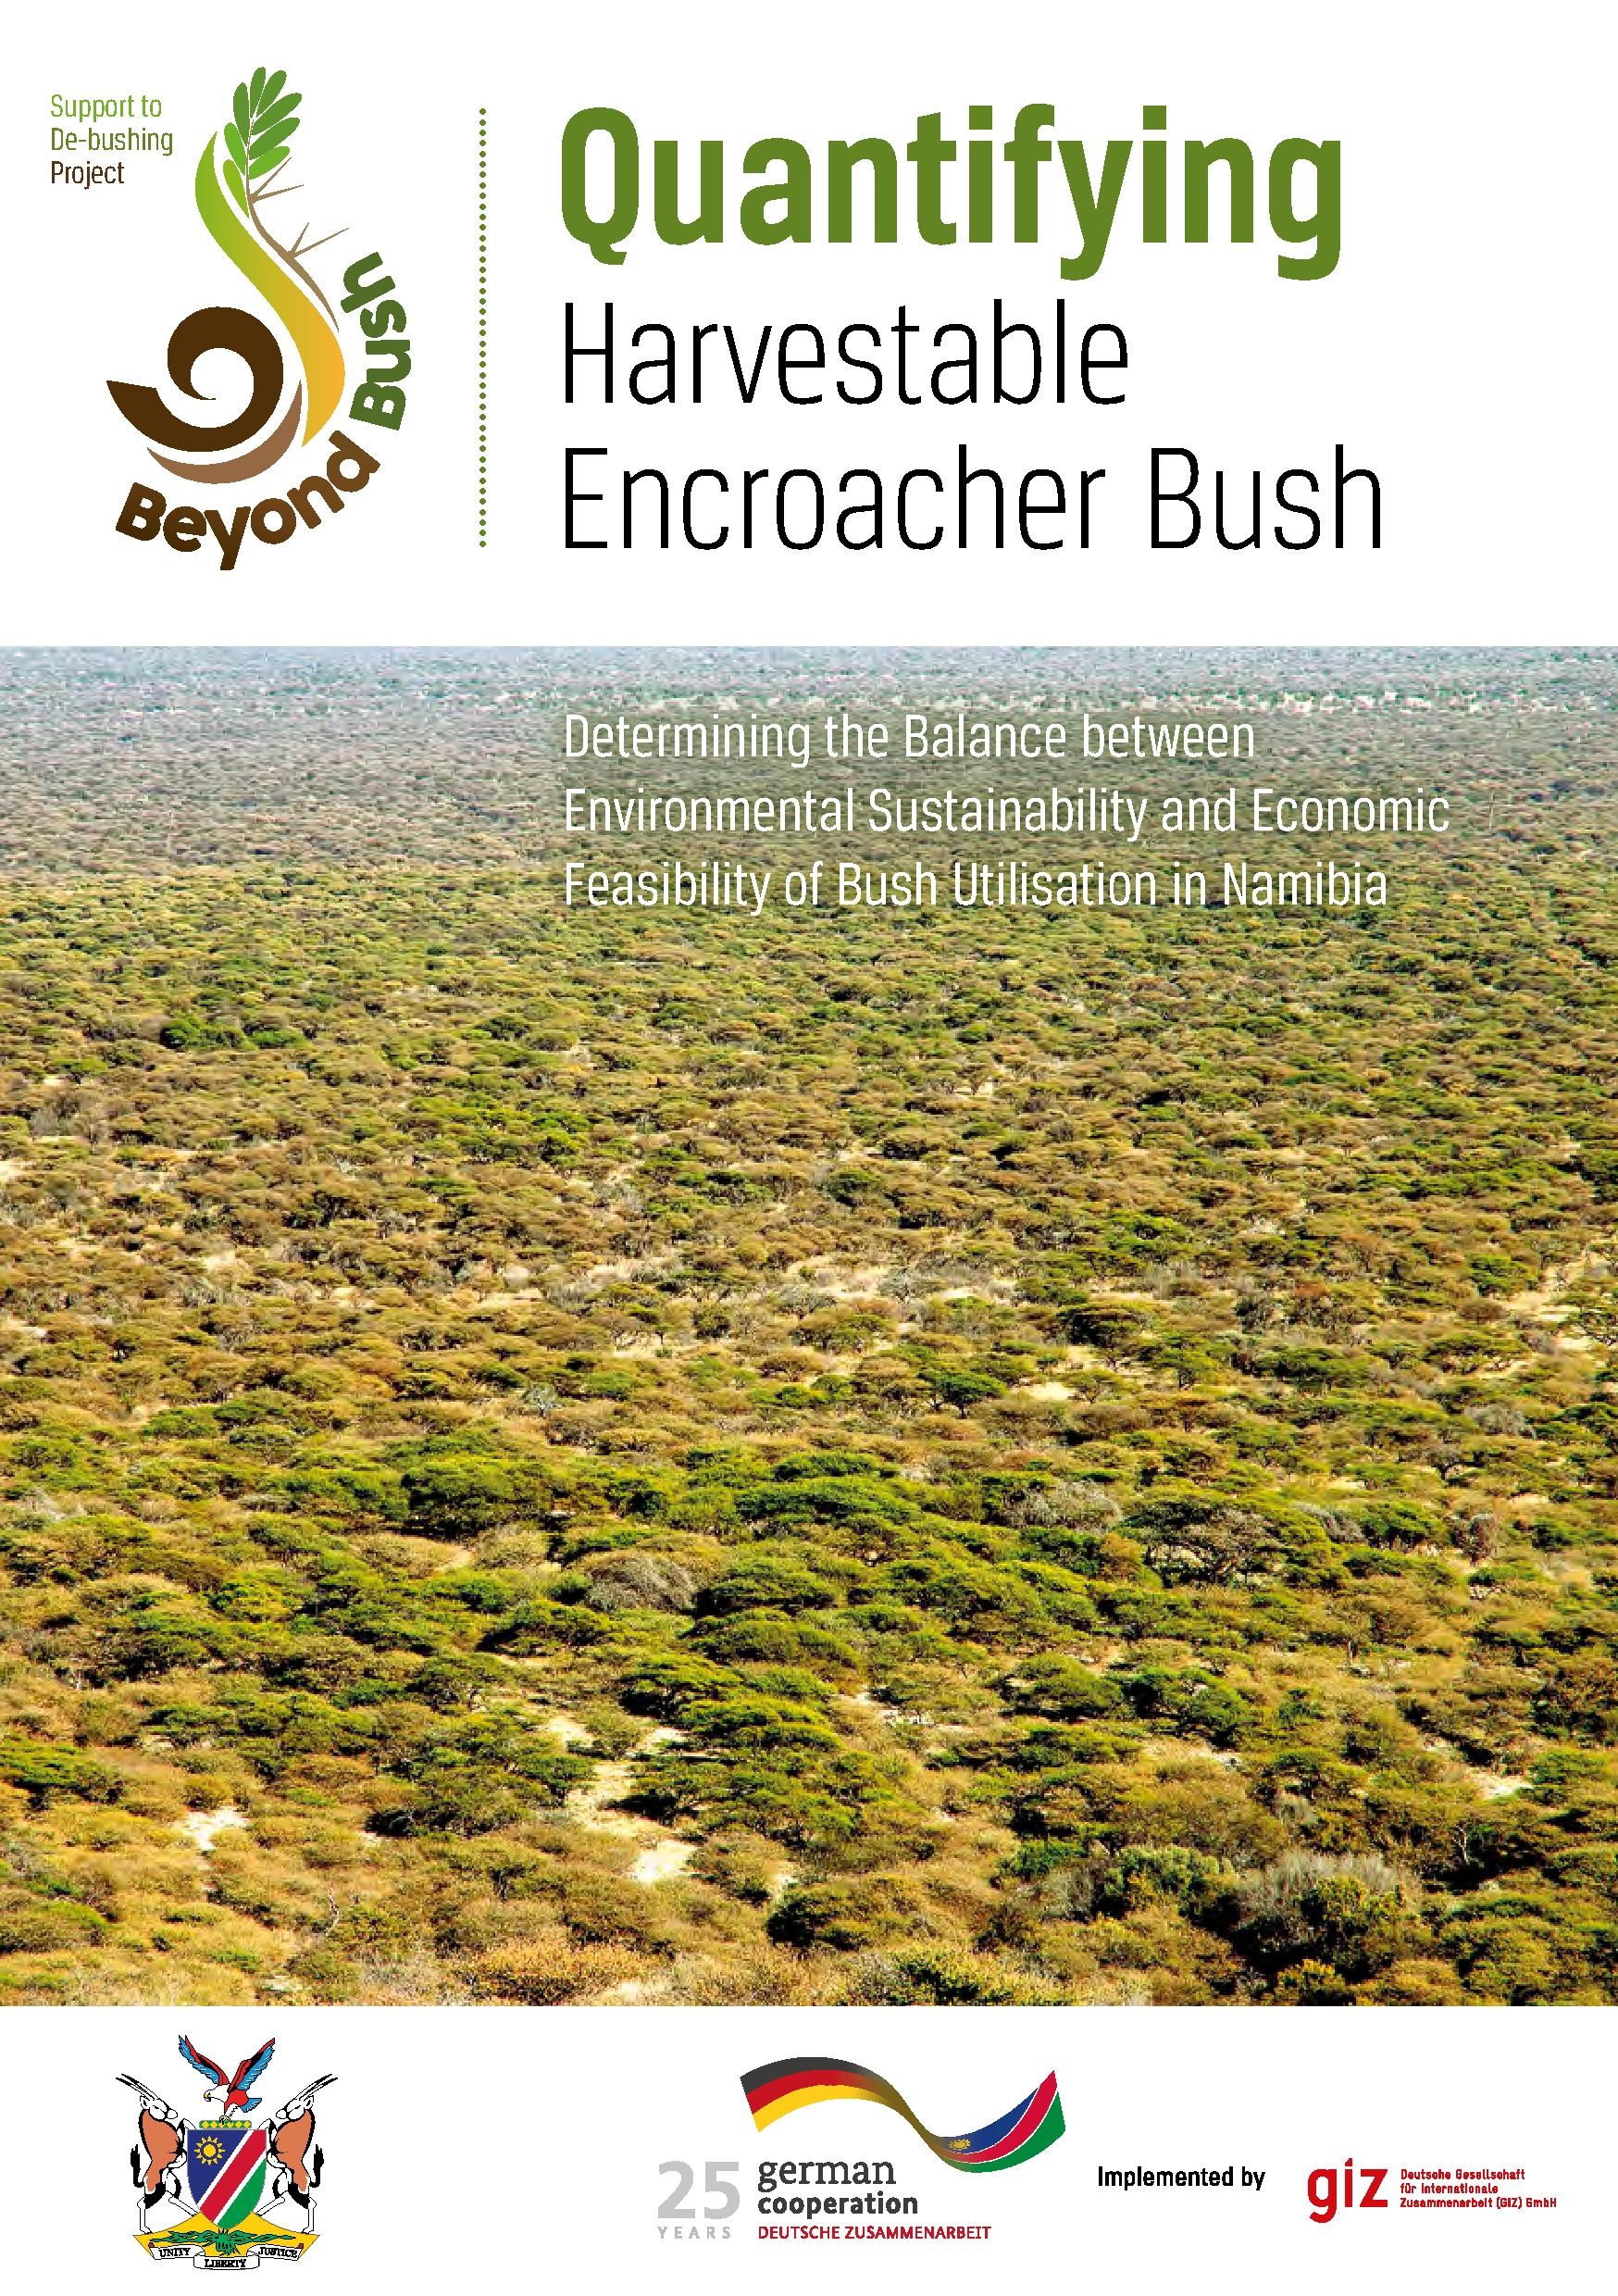 Quantifying Harvestable Encroacher Bush in Namibia (2015)